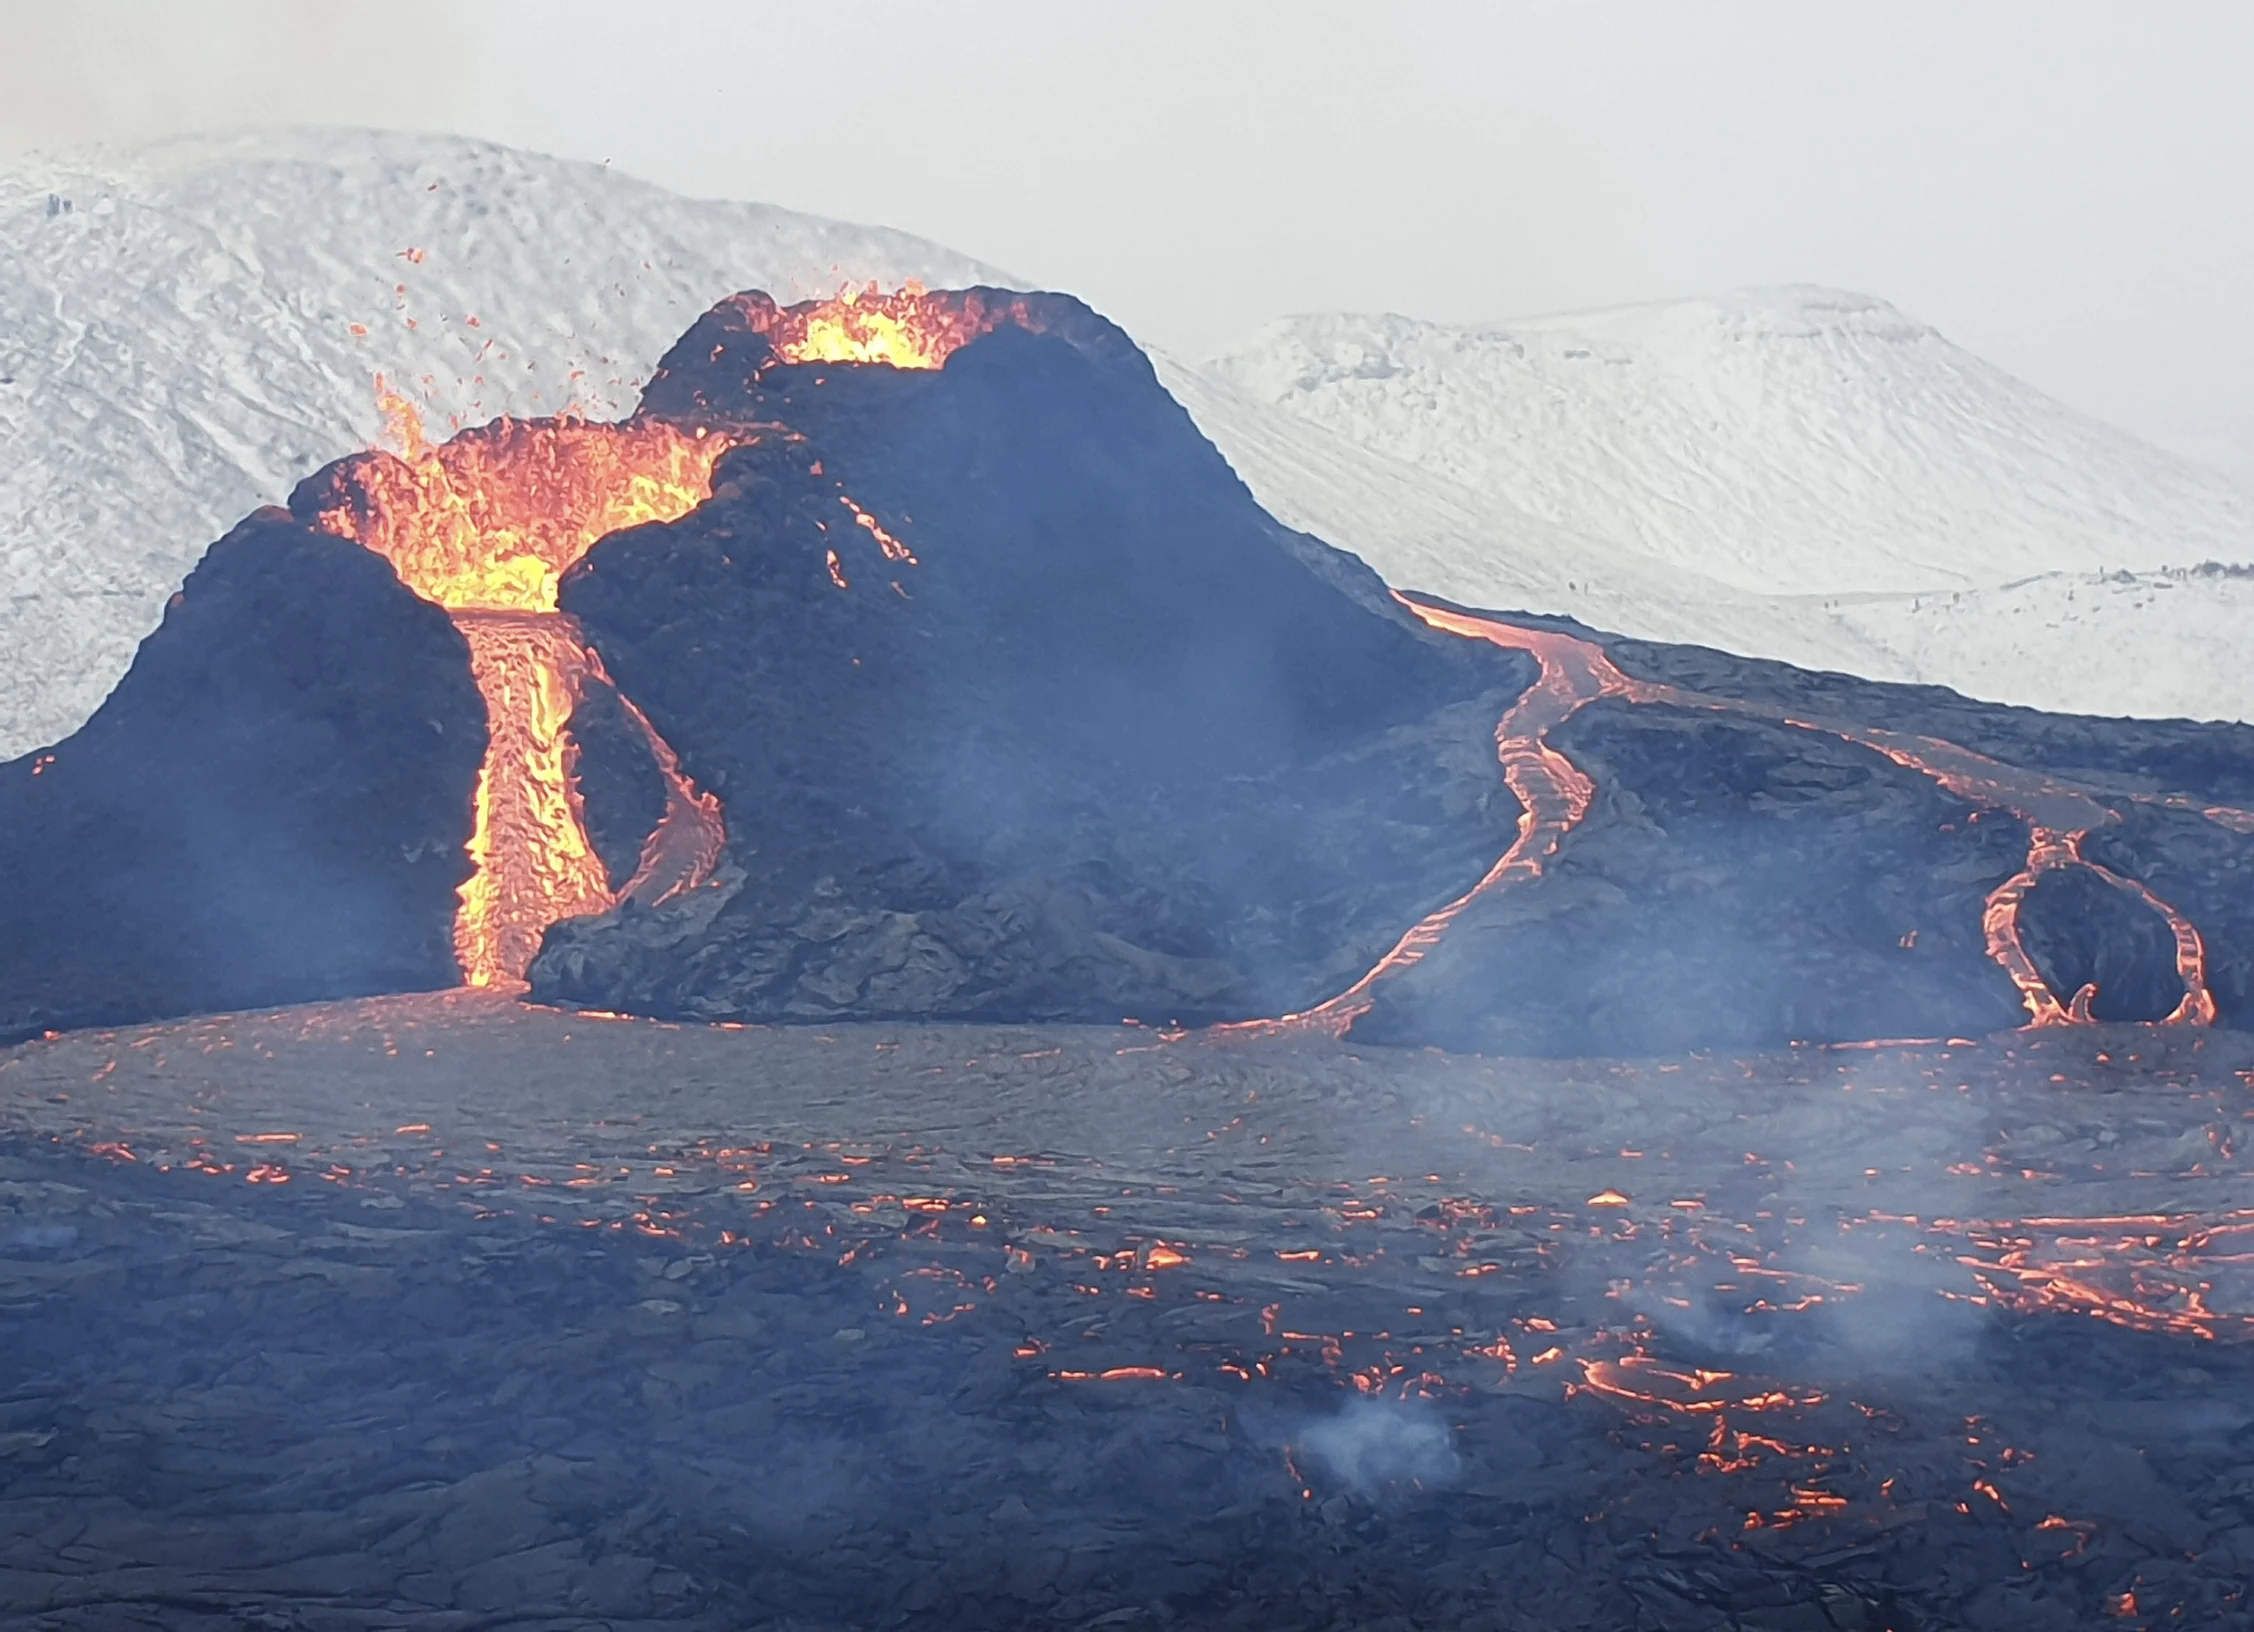 Wikipedia/CC BY 4.0/Berserkur: Geldingadalir eruption near Fagradalsfjall, 24 March 2021. Link: https://en.wikipedia.org/wiki/Fagradalsfjall#/media/File:Geldingadalagos.jpg